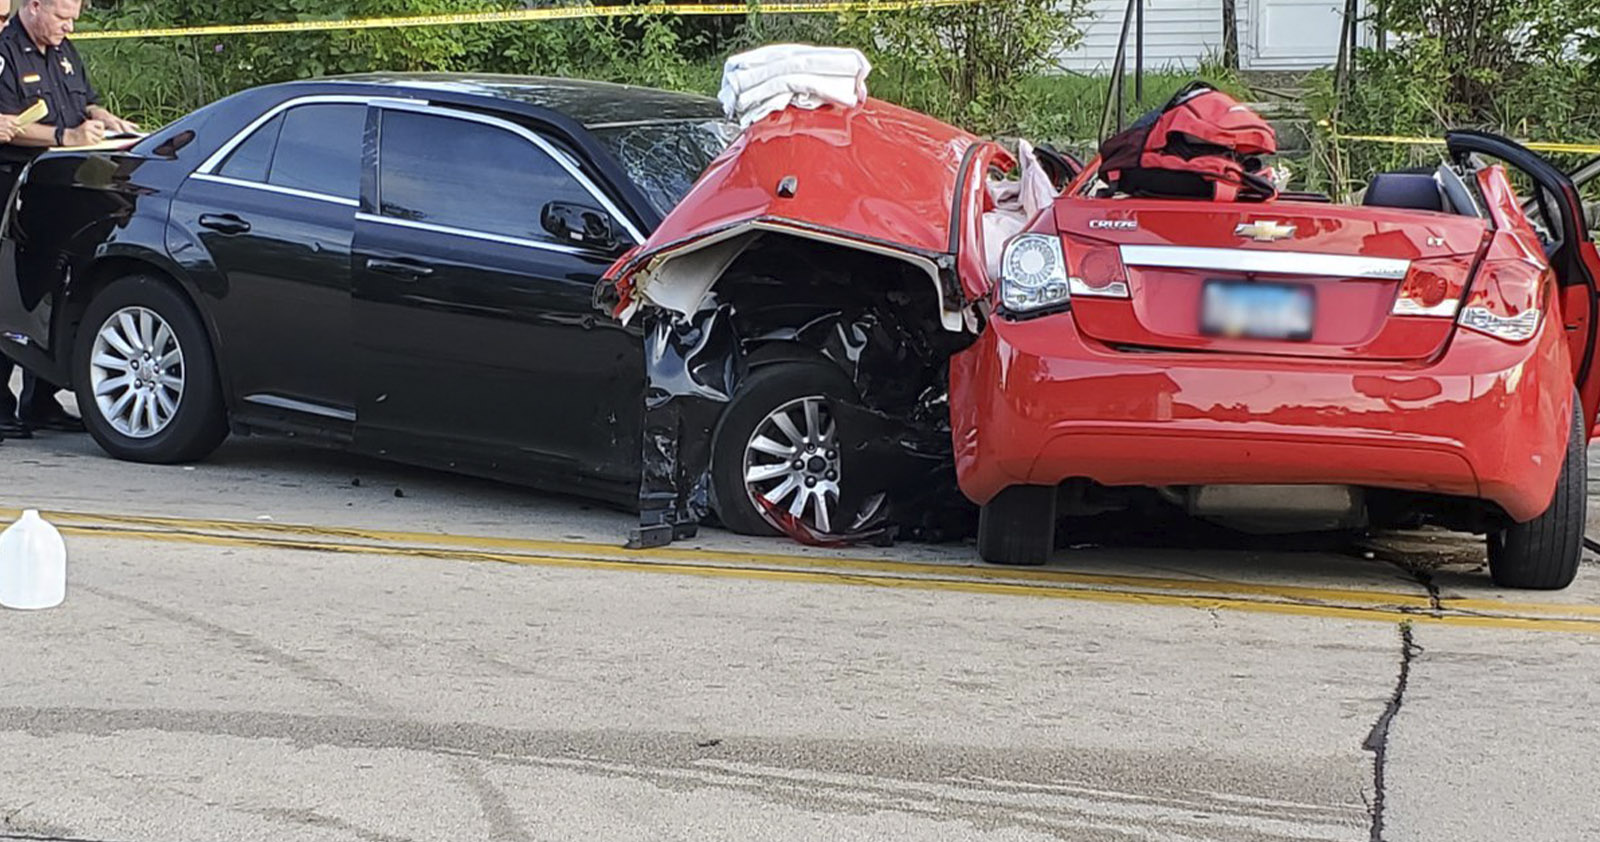 Black car crashing into a red car